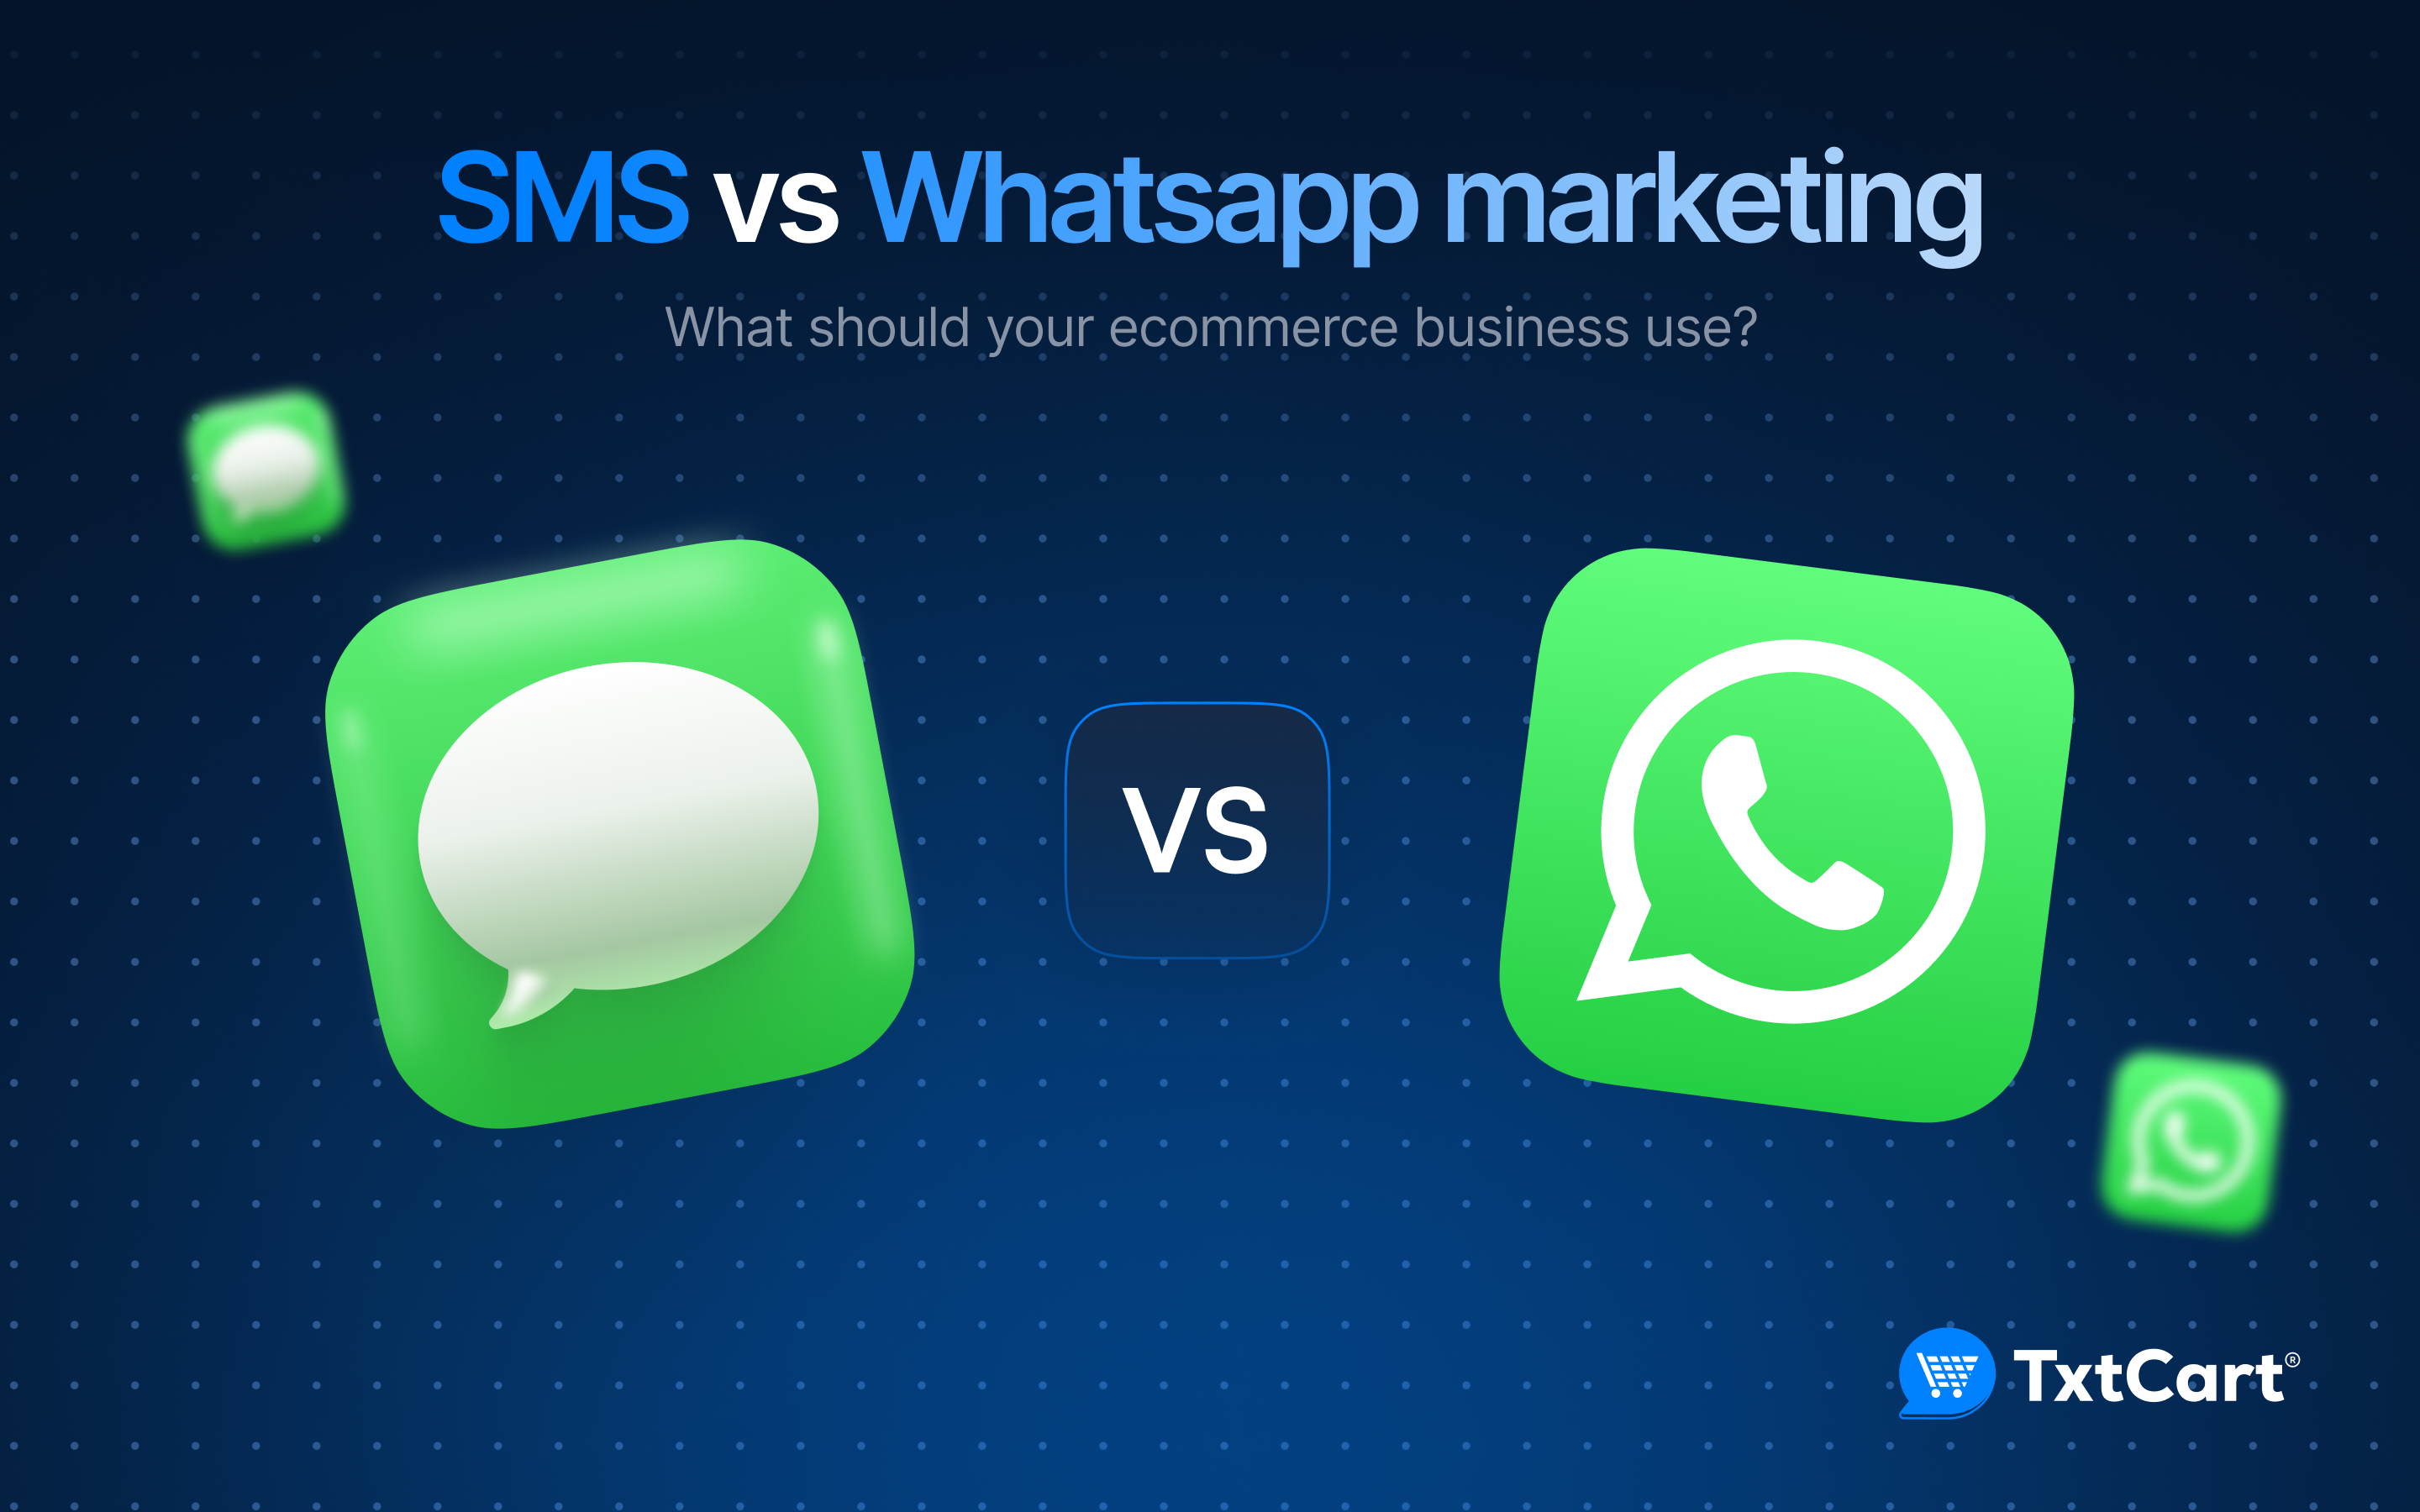 SMS vs Whatsapp marketing